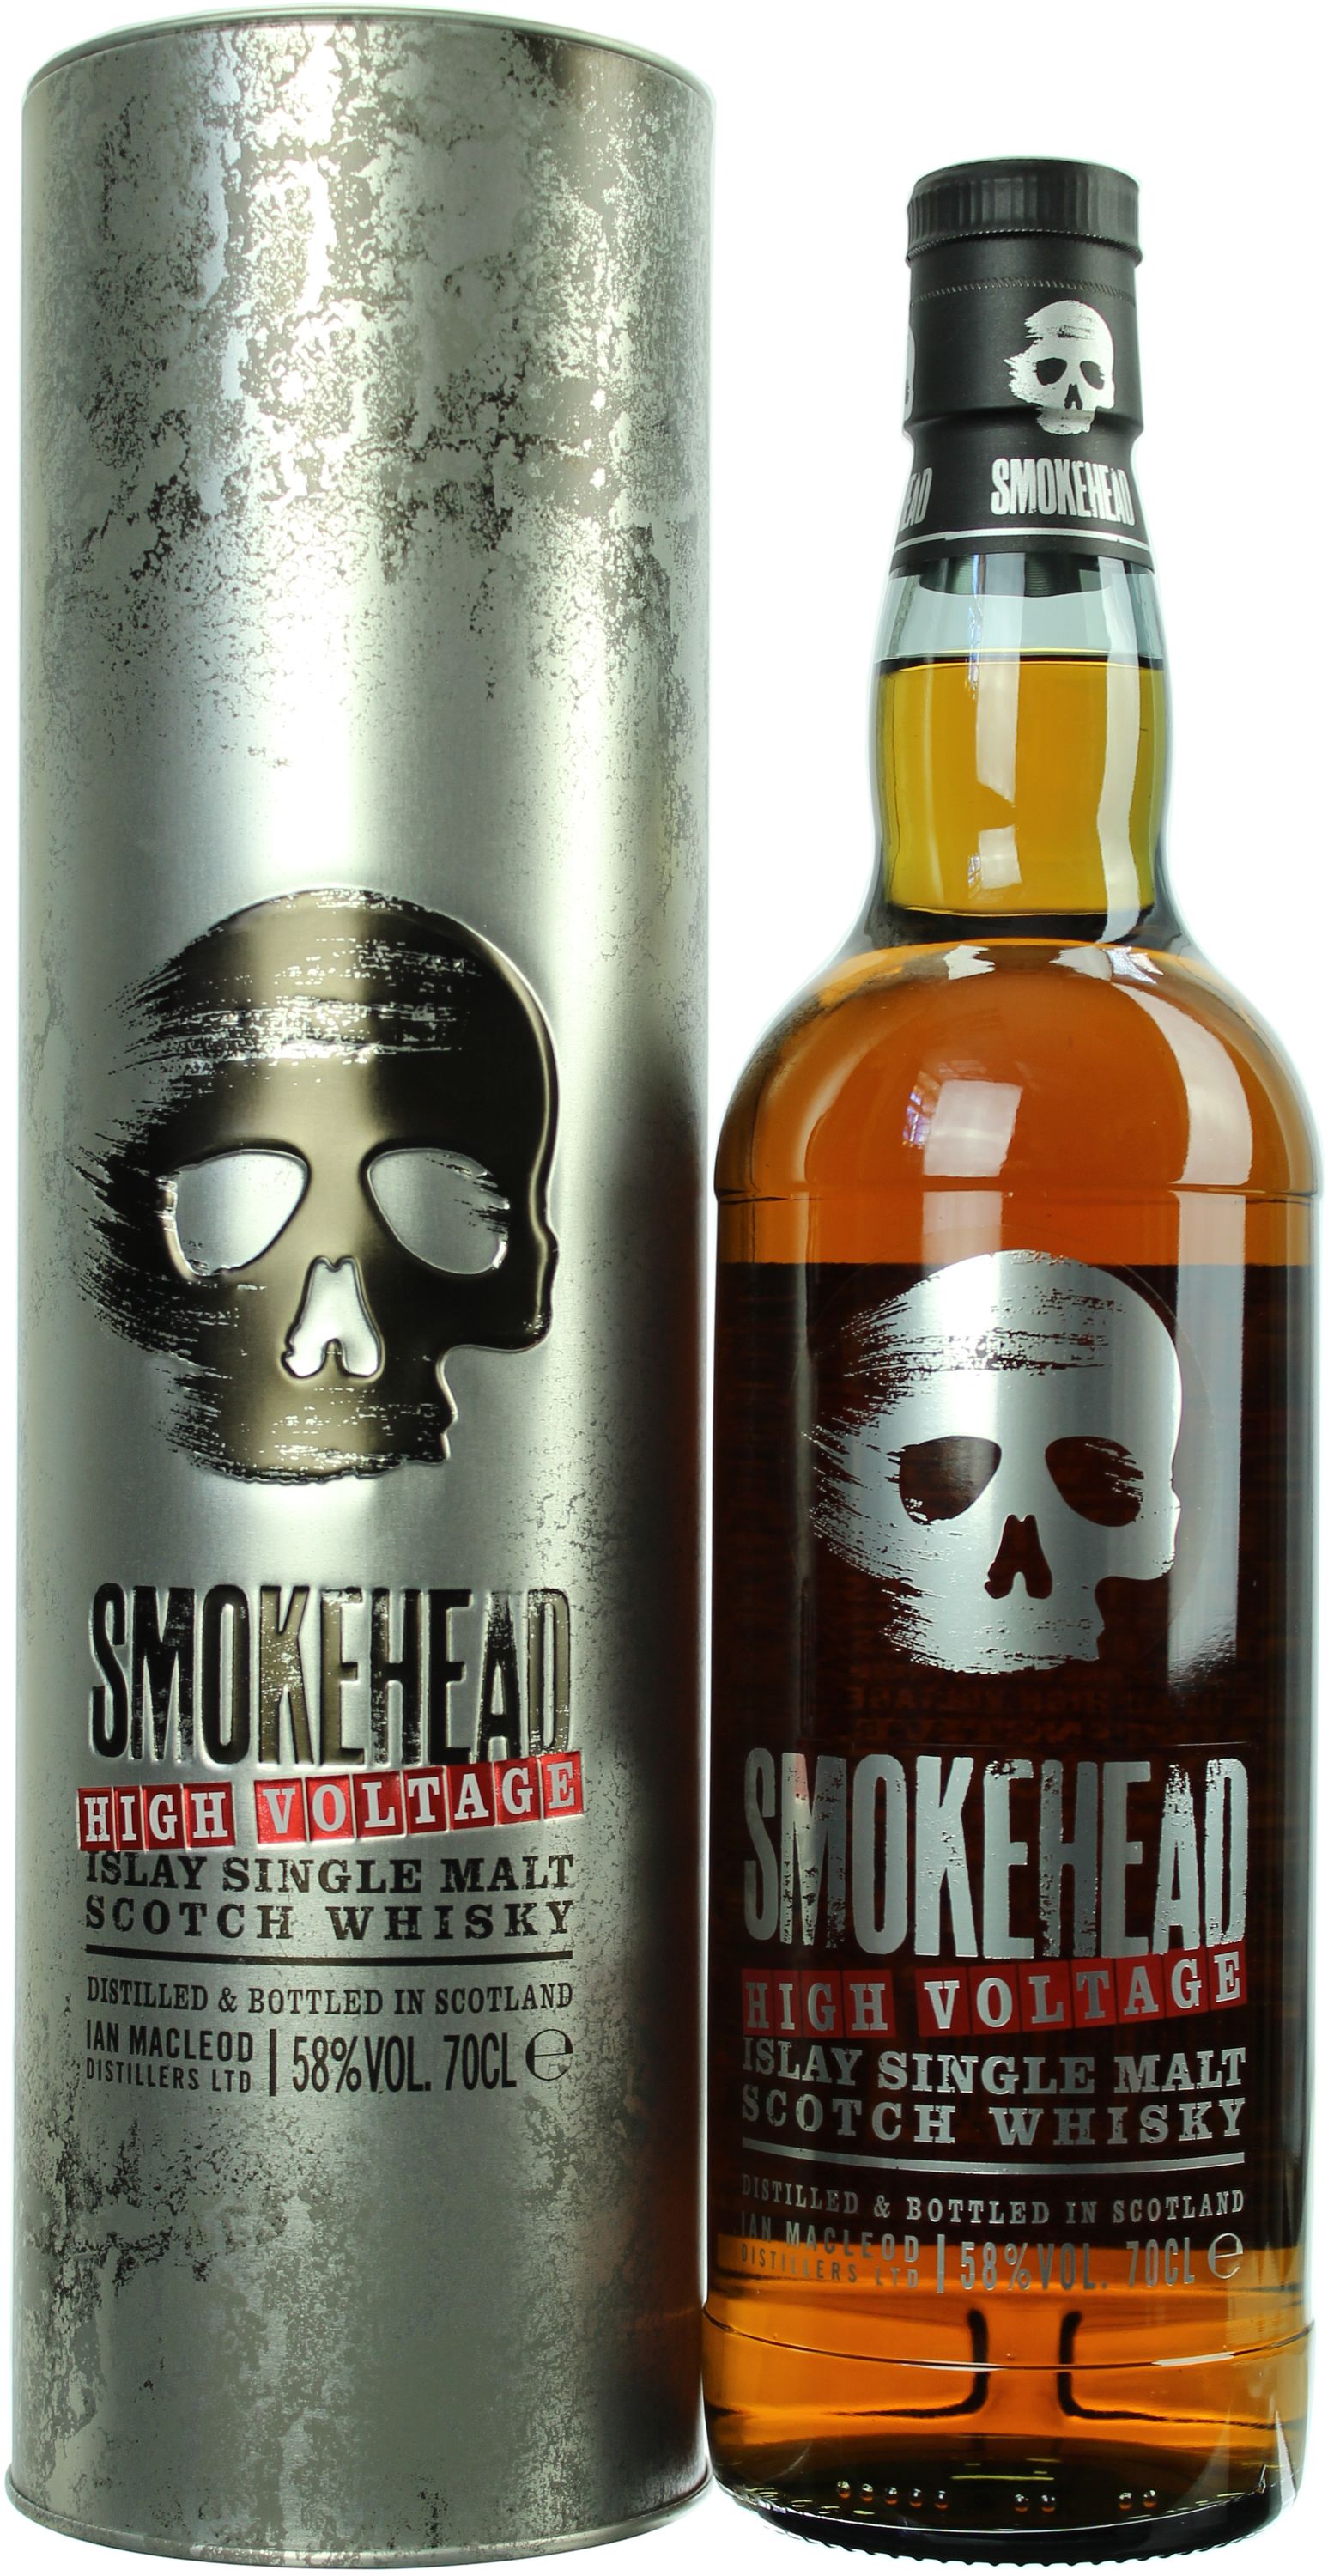 Smokehead High Voltage Single Malt Scotch Whiskey 0.7l, alc. 58% by volume